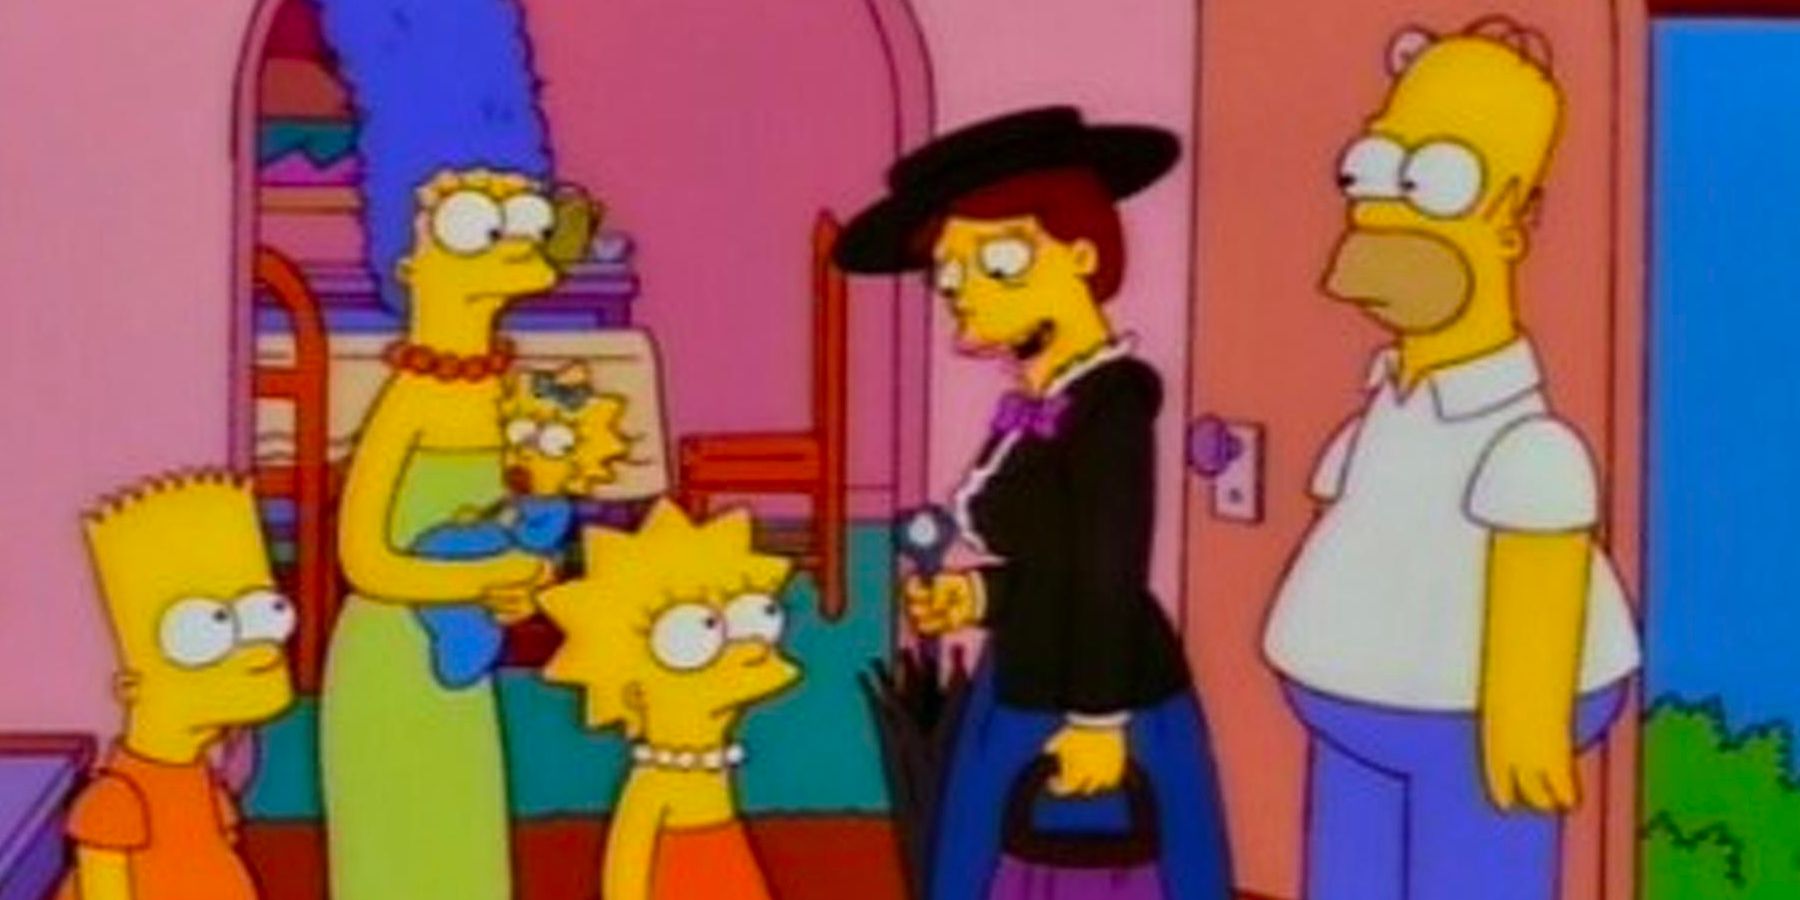 The Simpsons Simpsoncalifragilisticexpiala(Annoyed Grunt)cious musical episode